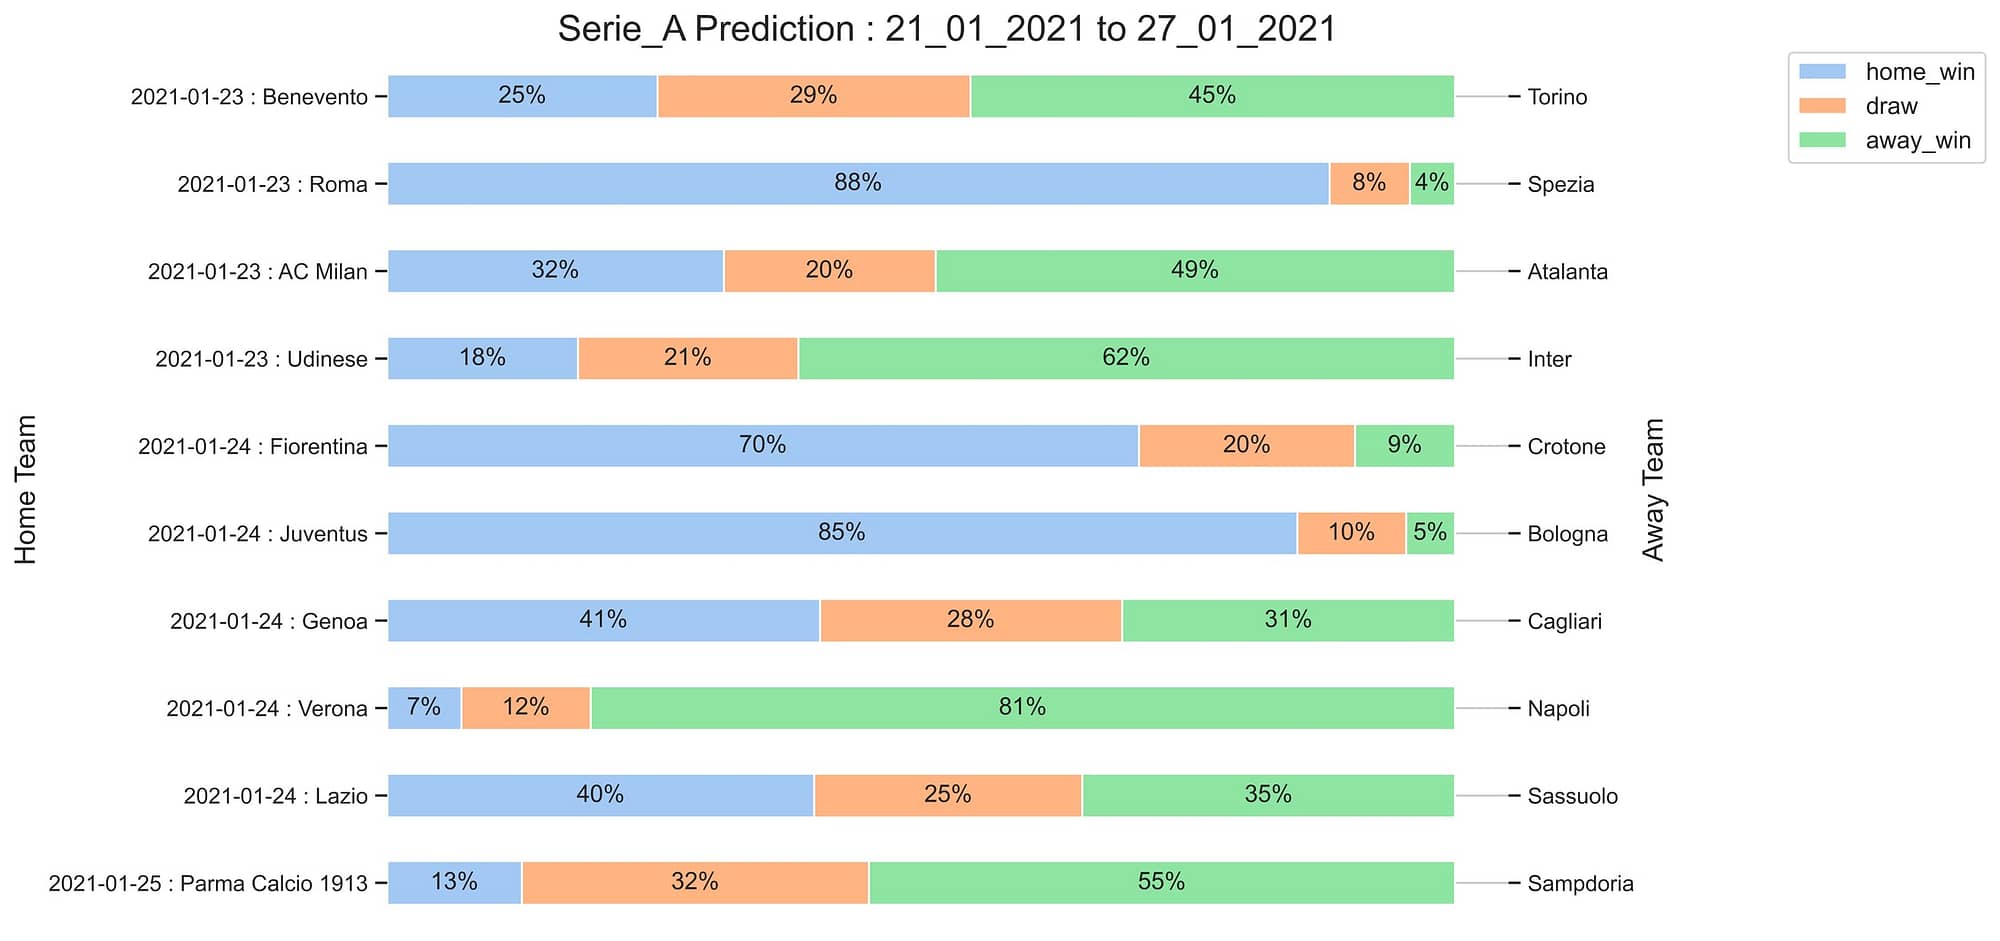 Serie_A_Prediction 21_01_2021